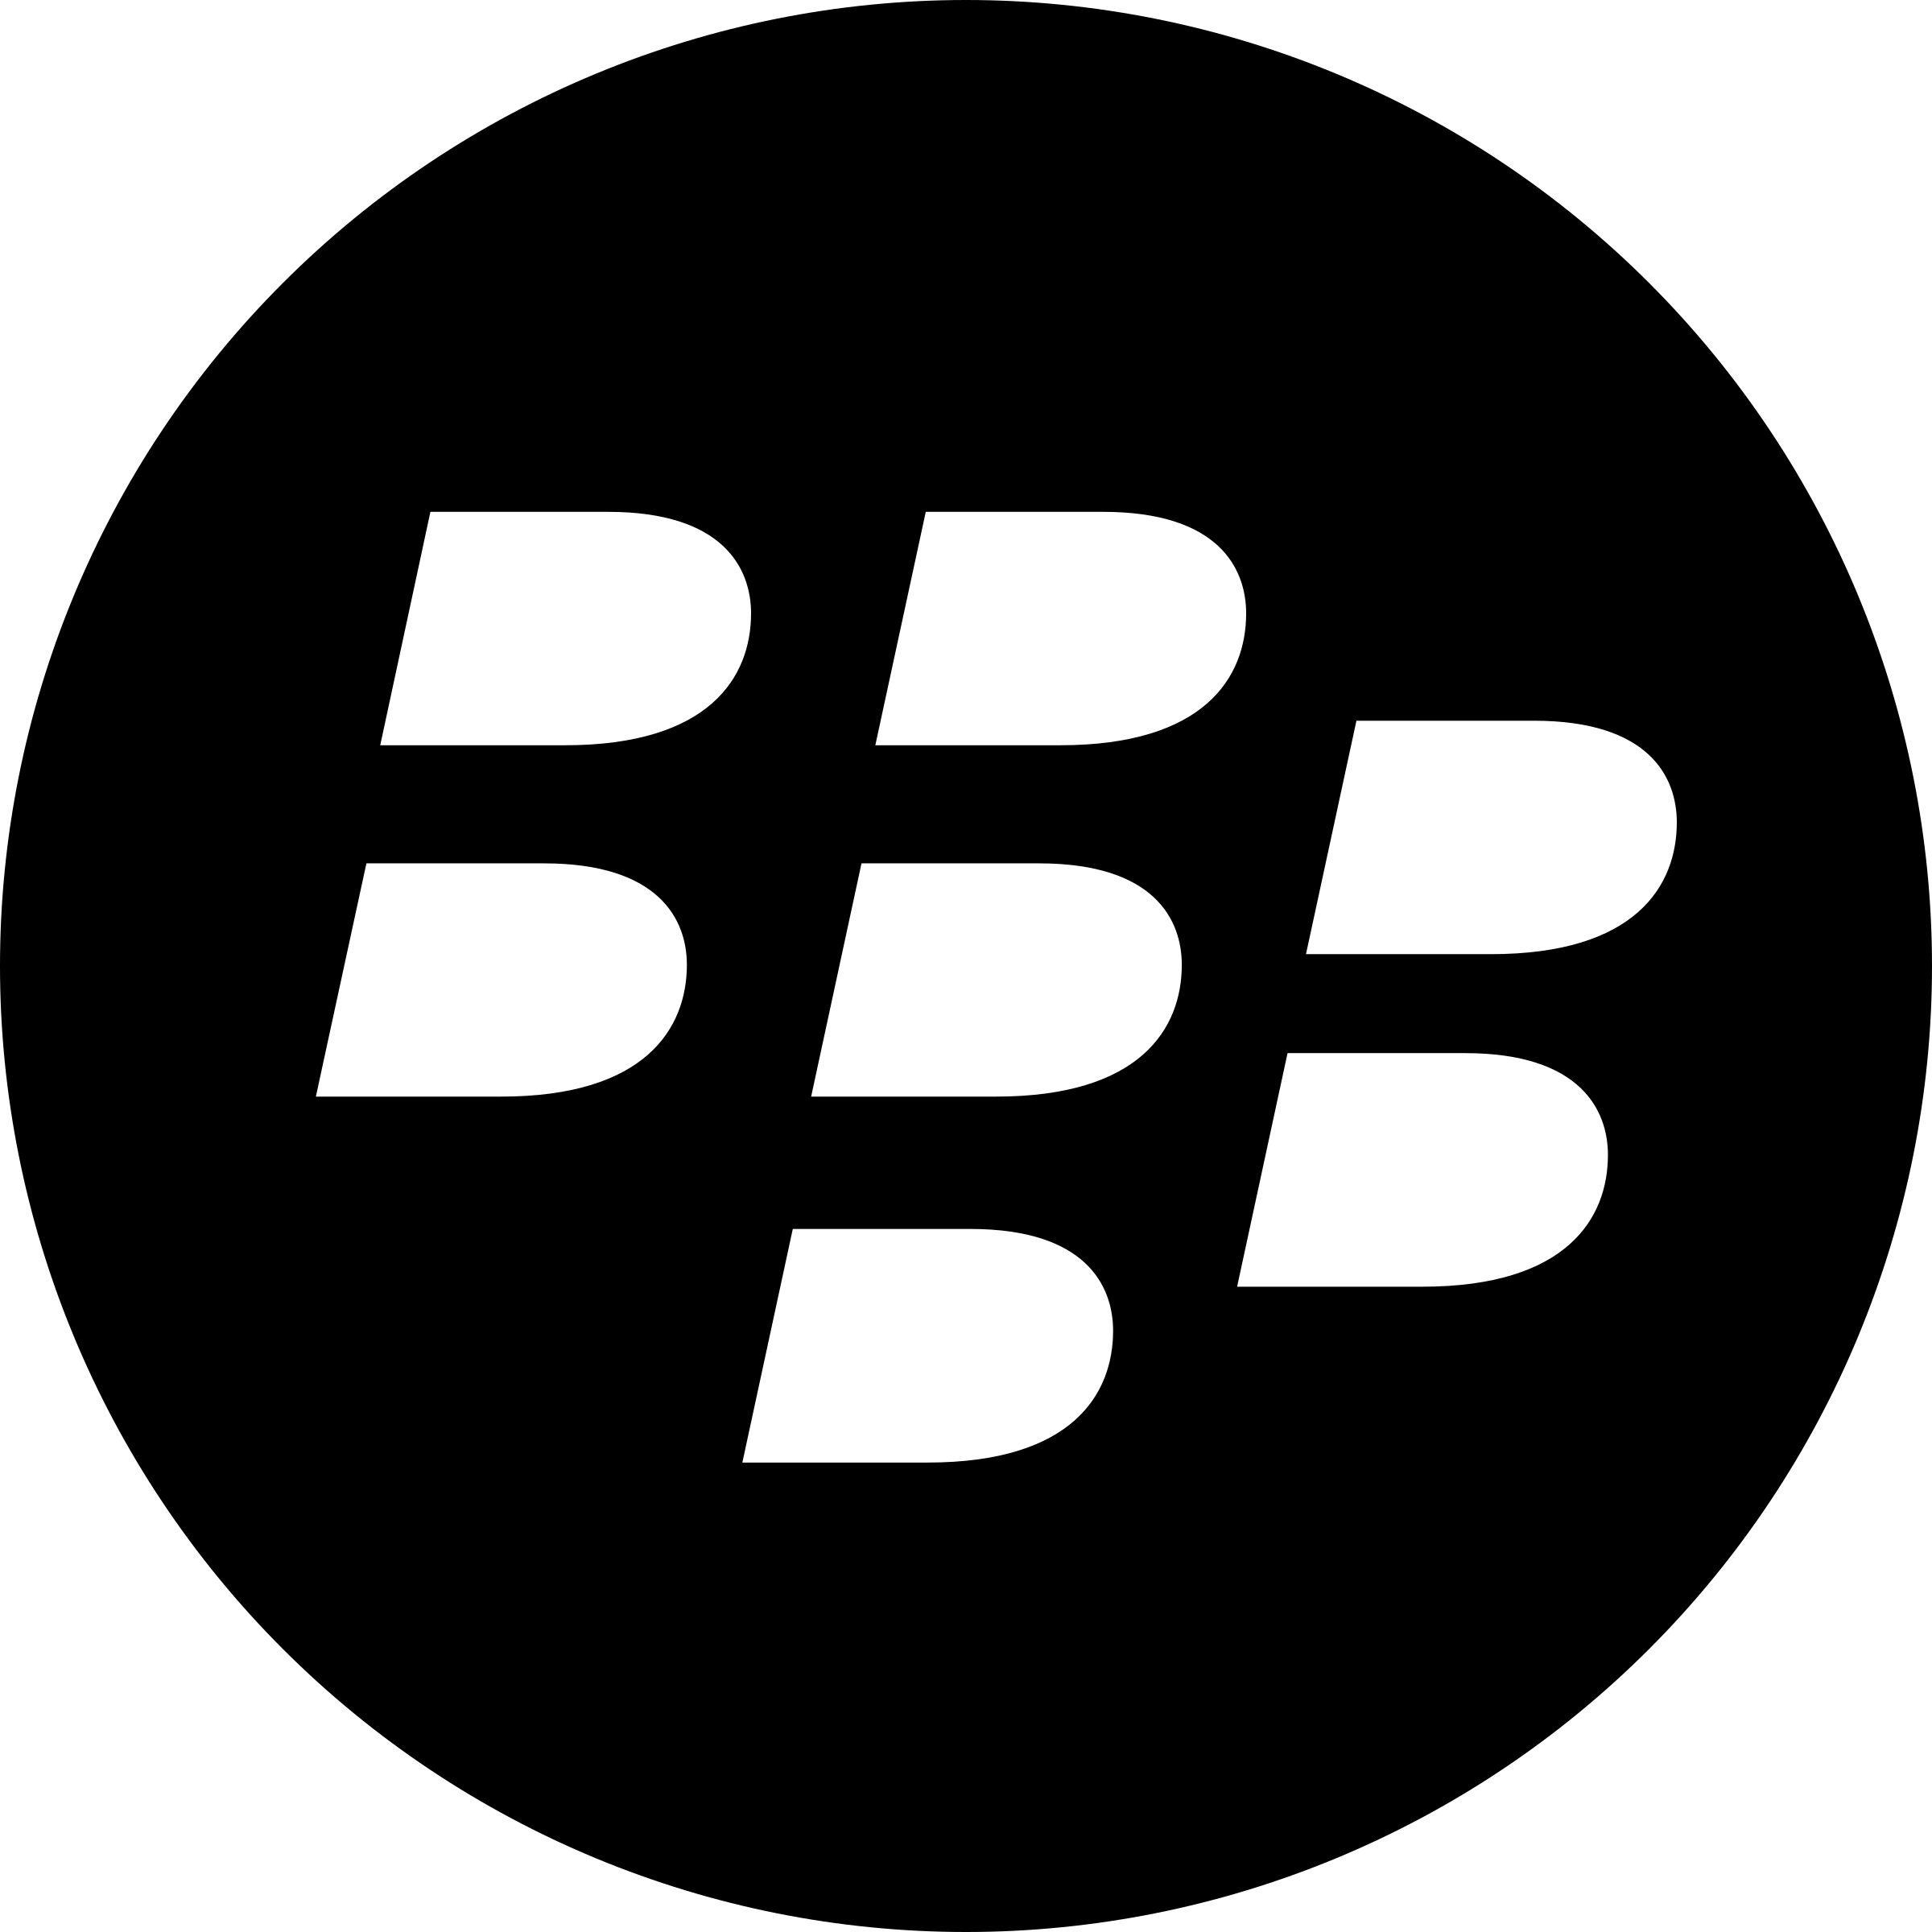 Bbm Blackberry Messenger Logo Png Transp #1819438   Png Images   Pngio - Blackberry, Transparent background PNG HD thumbnail